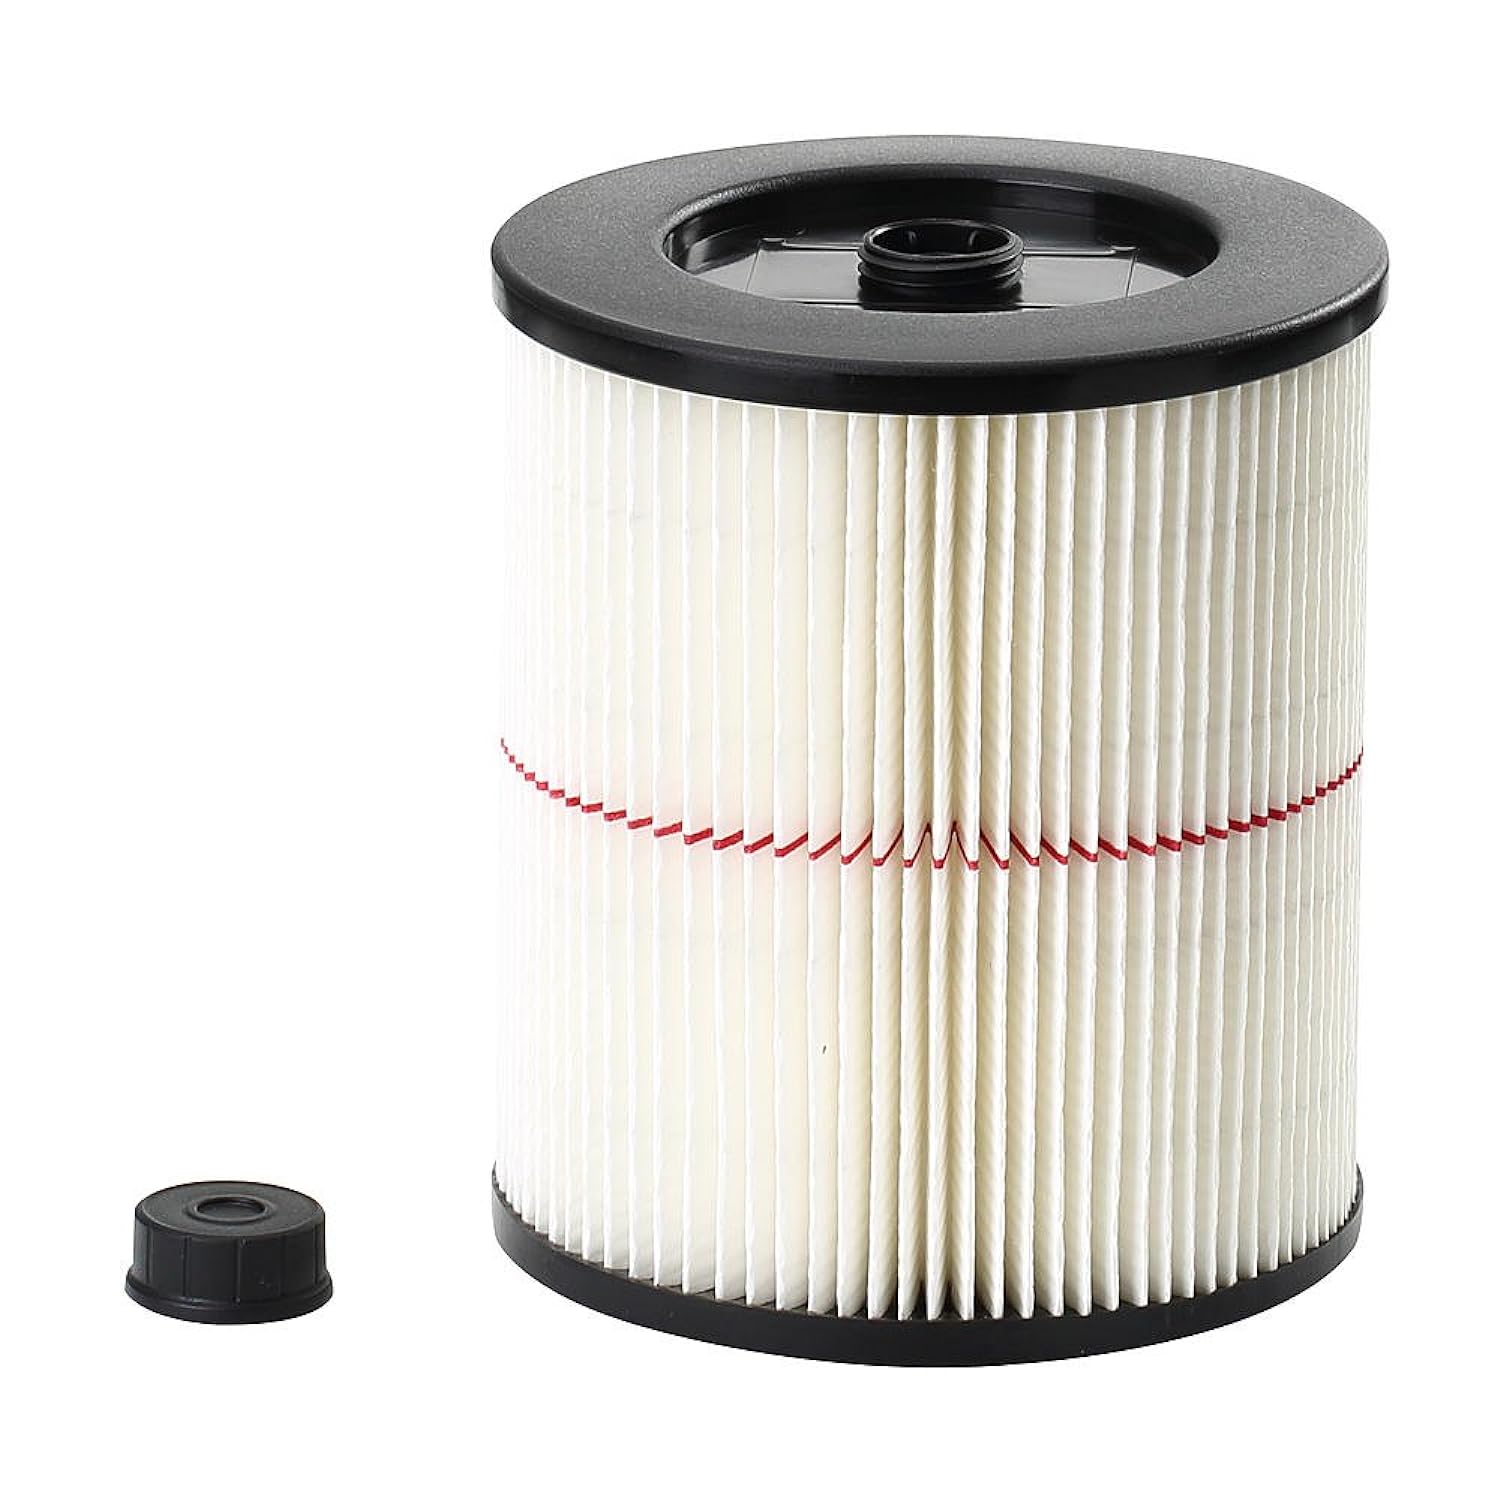 Craftsman 9-17816 General Purpose Red Stripe Vacuum Cartridge Filter, 8.5 Inches - White/Red